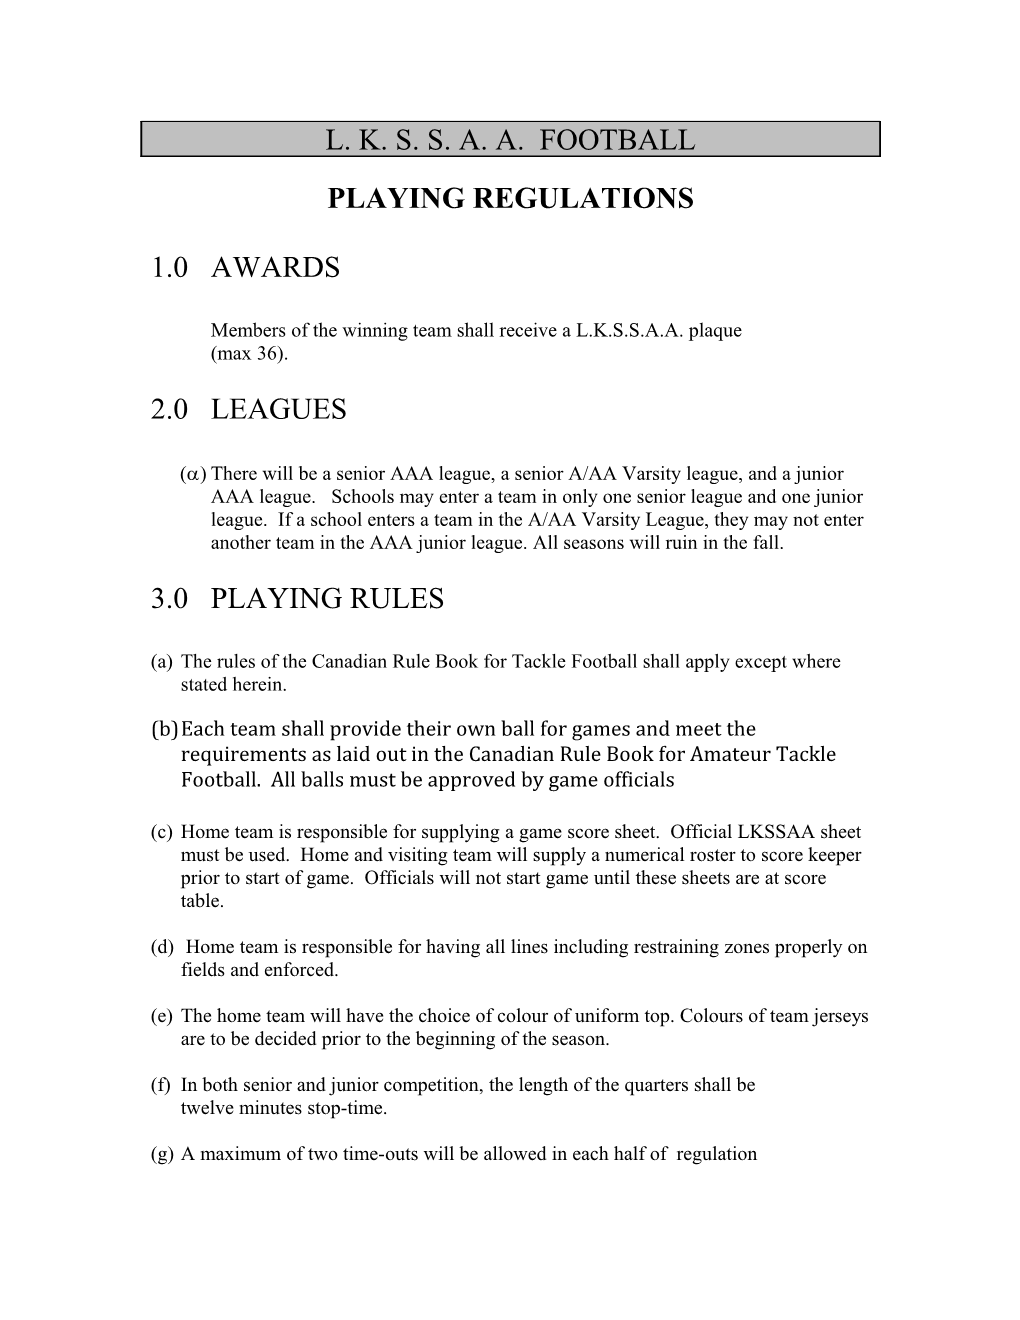 Playing Regulations s1